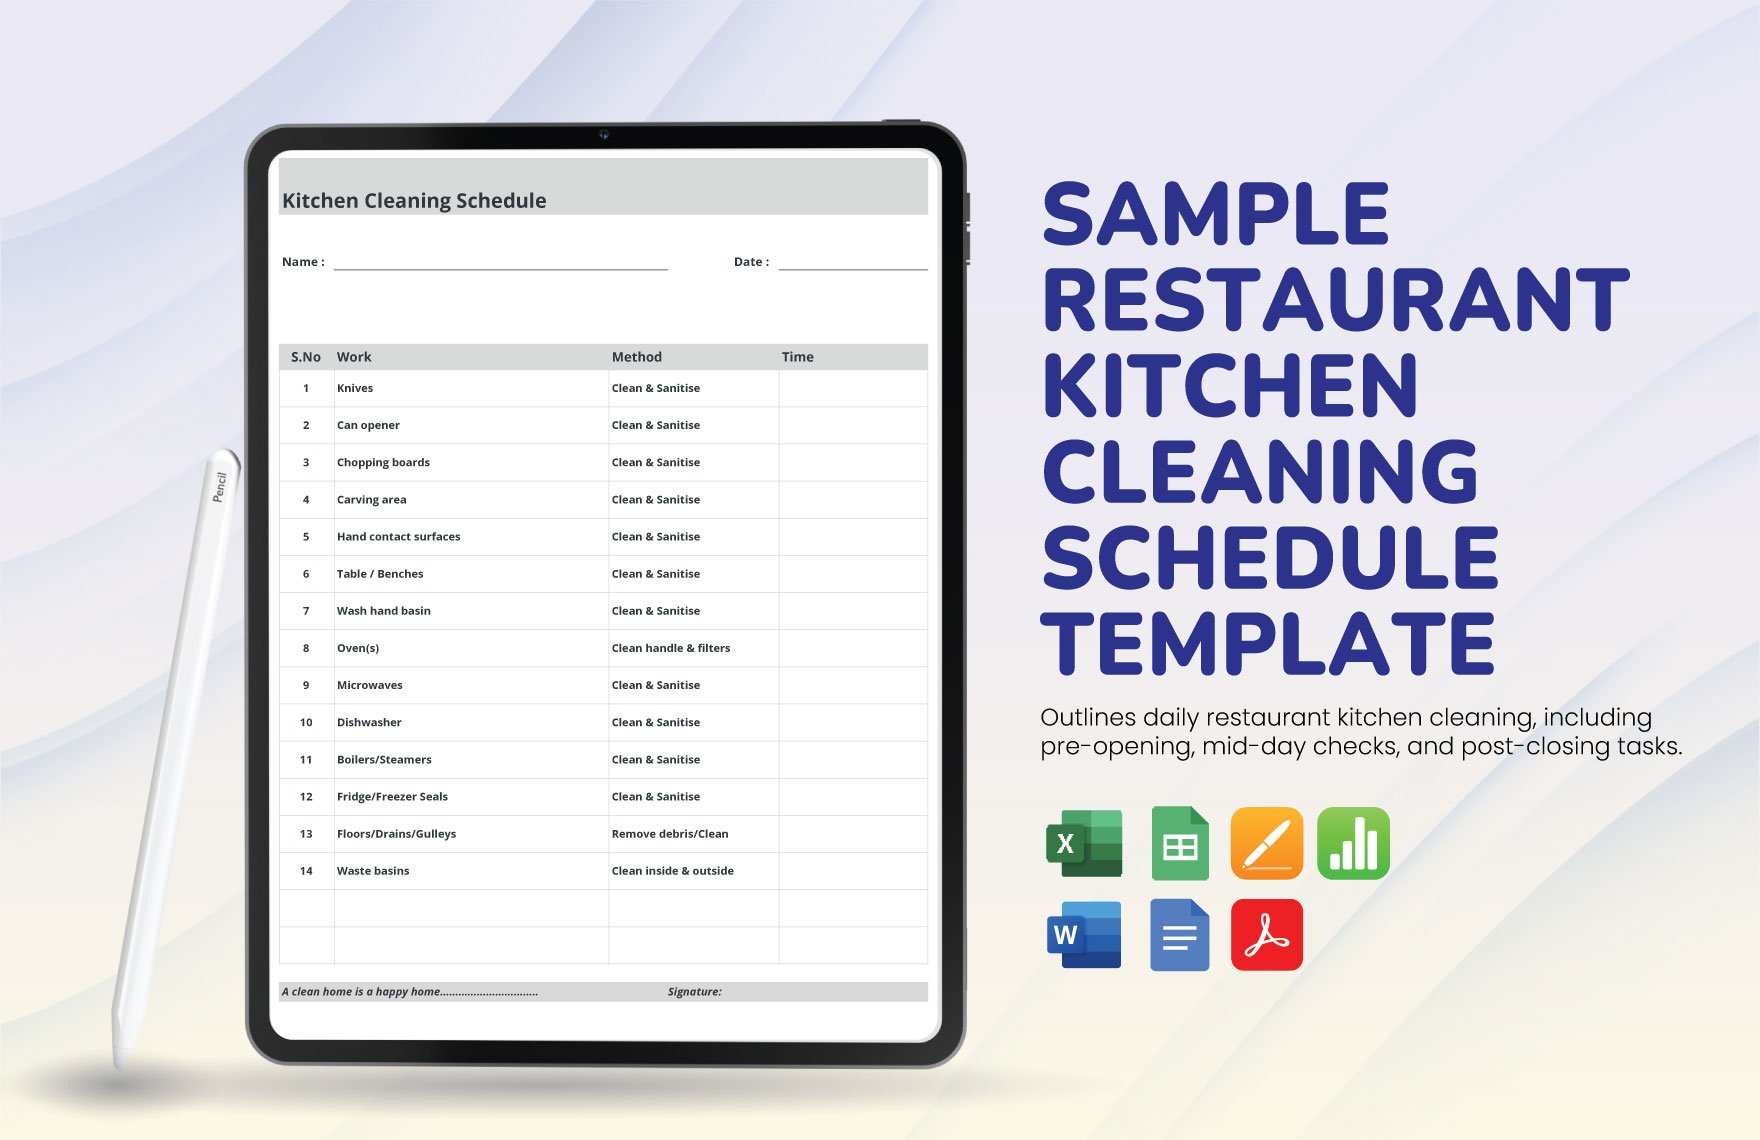 Sample Restaurant Kitchen Cleaning Schedule Template